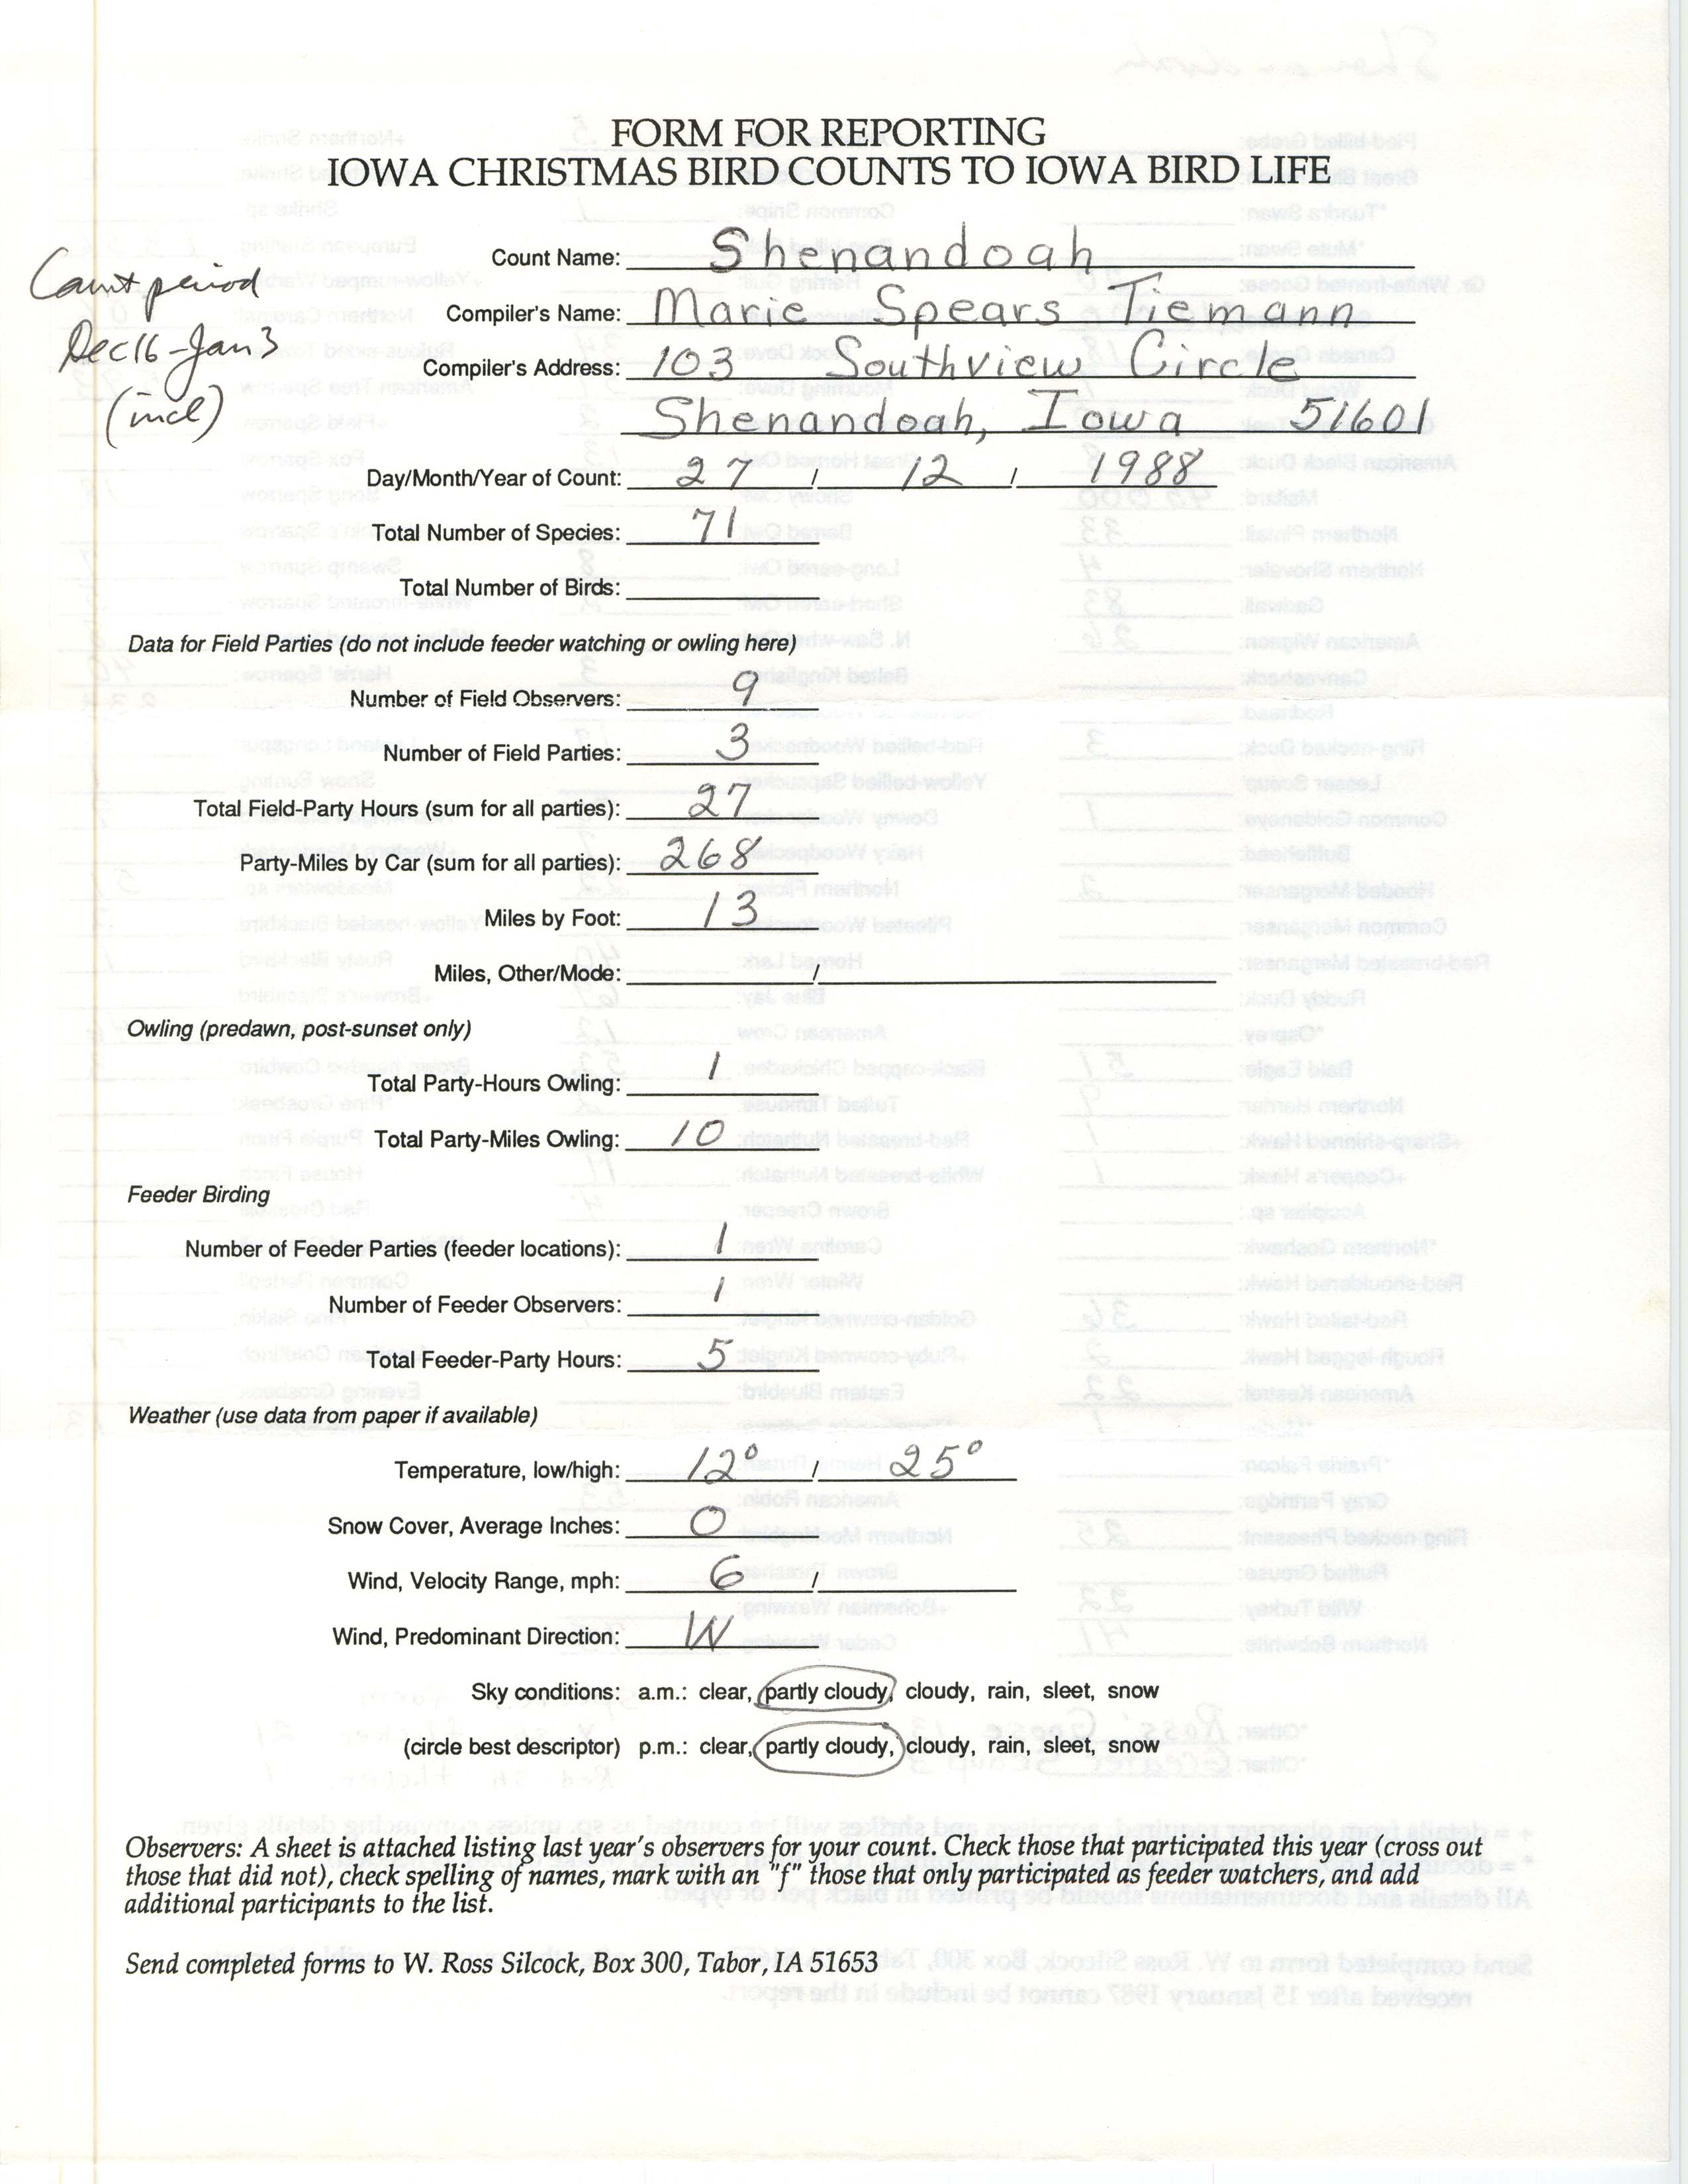 Form for reporting Iowa Christmas bird counts to Iowa Bird Life, Marie E. Spears Tiemann, December 27, 1988